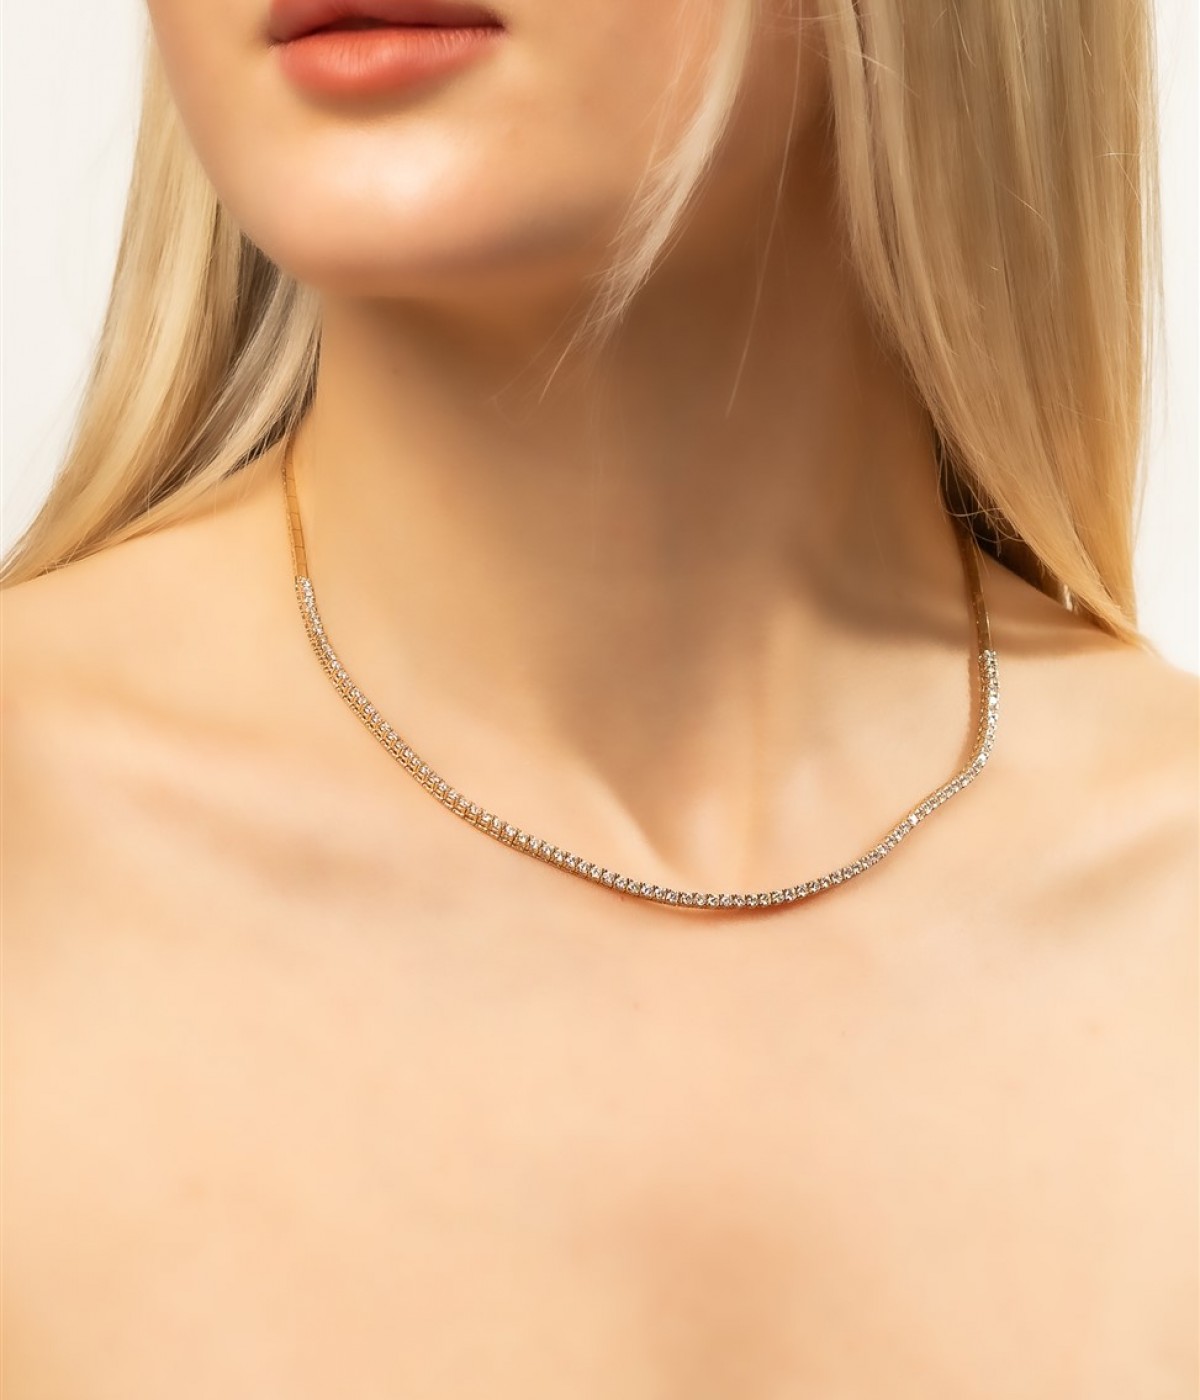 Elegance Diamond Necklace, 2.88 CT Diamond, 14K Gold Necklace